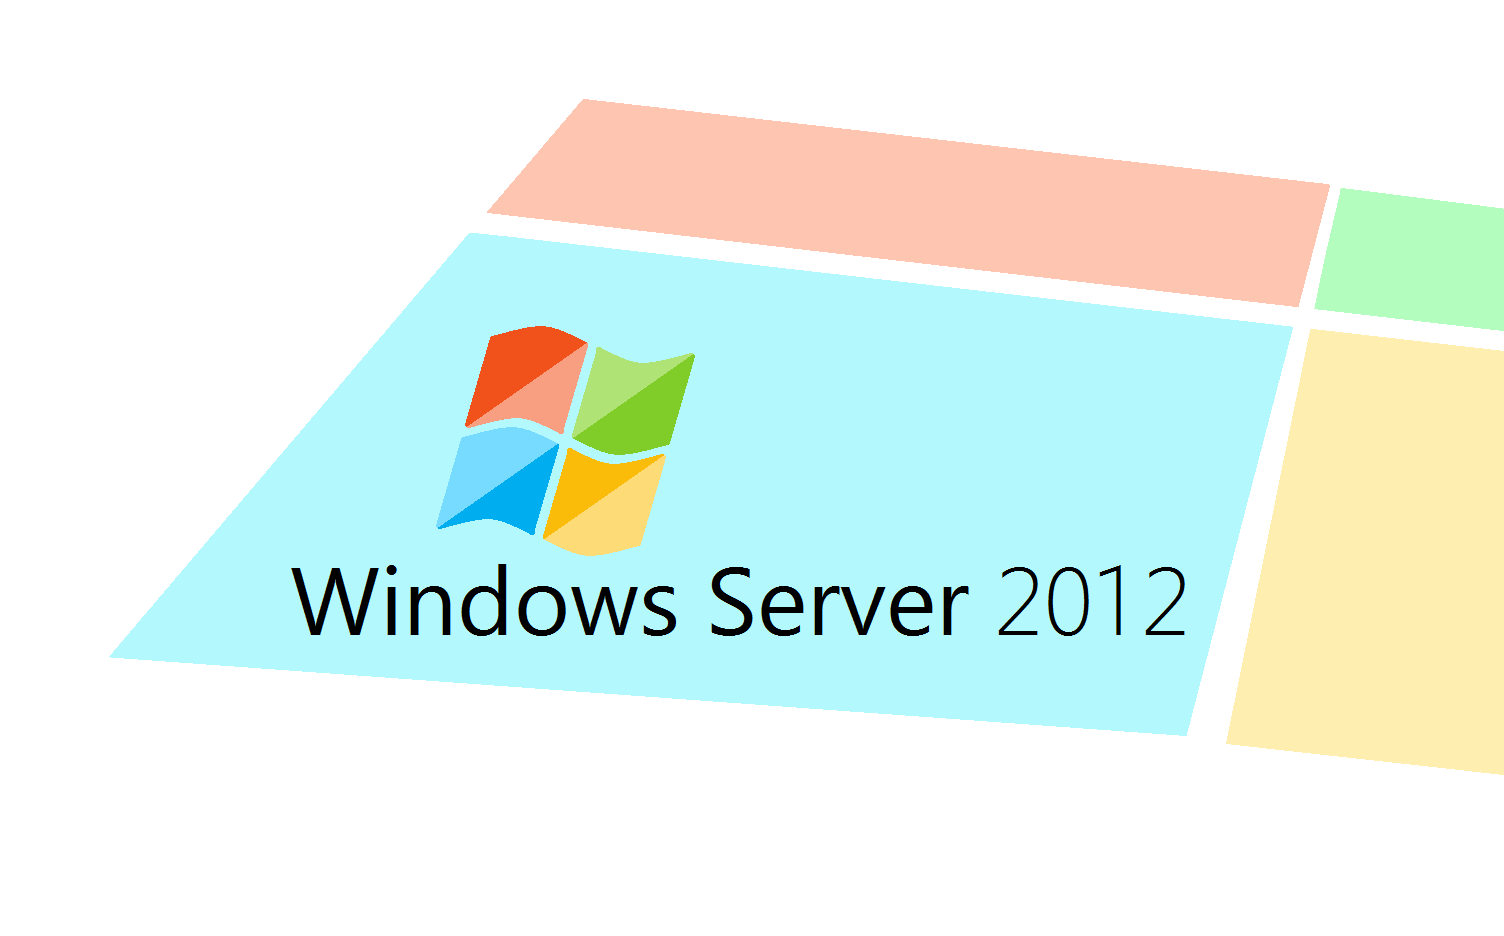 Windows Server 2012 Logo - Logos image Windows Server 2012 Logo HD wallpaper and background